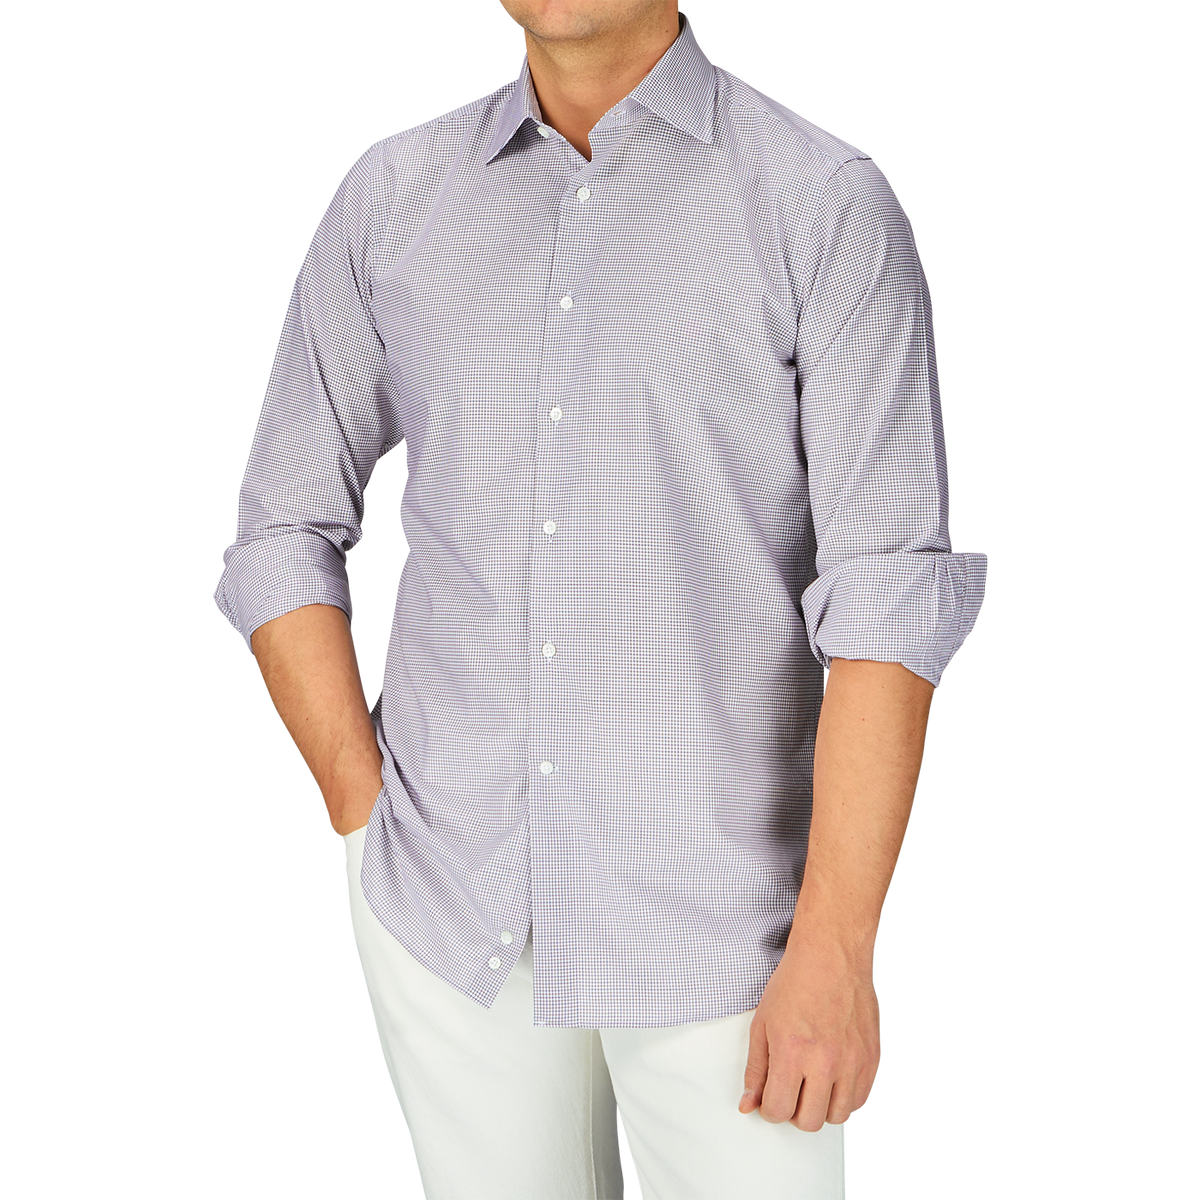 A man wearing a purple Canali shirt and white pants.